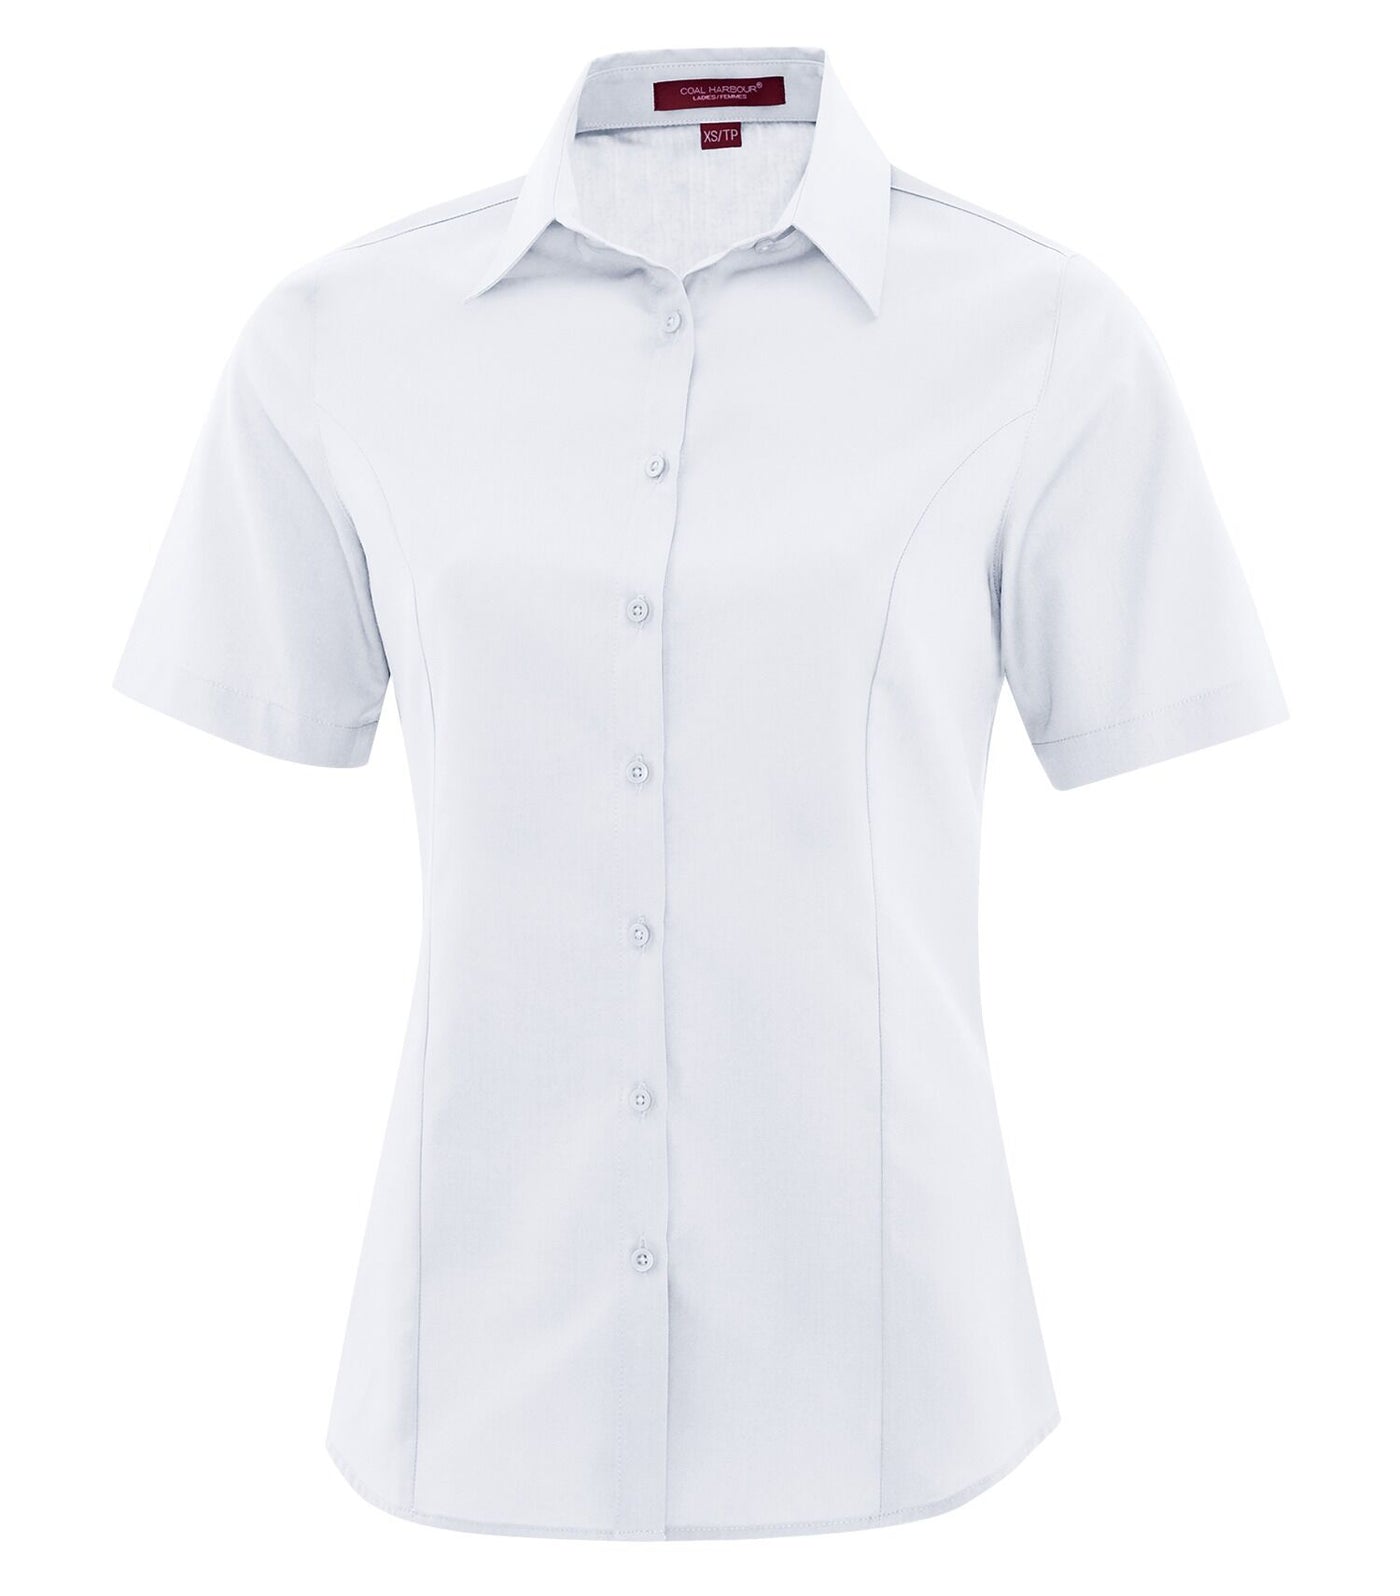 True White - Coal Harbour Women's Short Sleeve Work Shirt